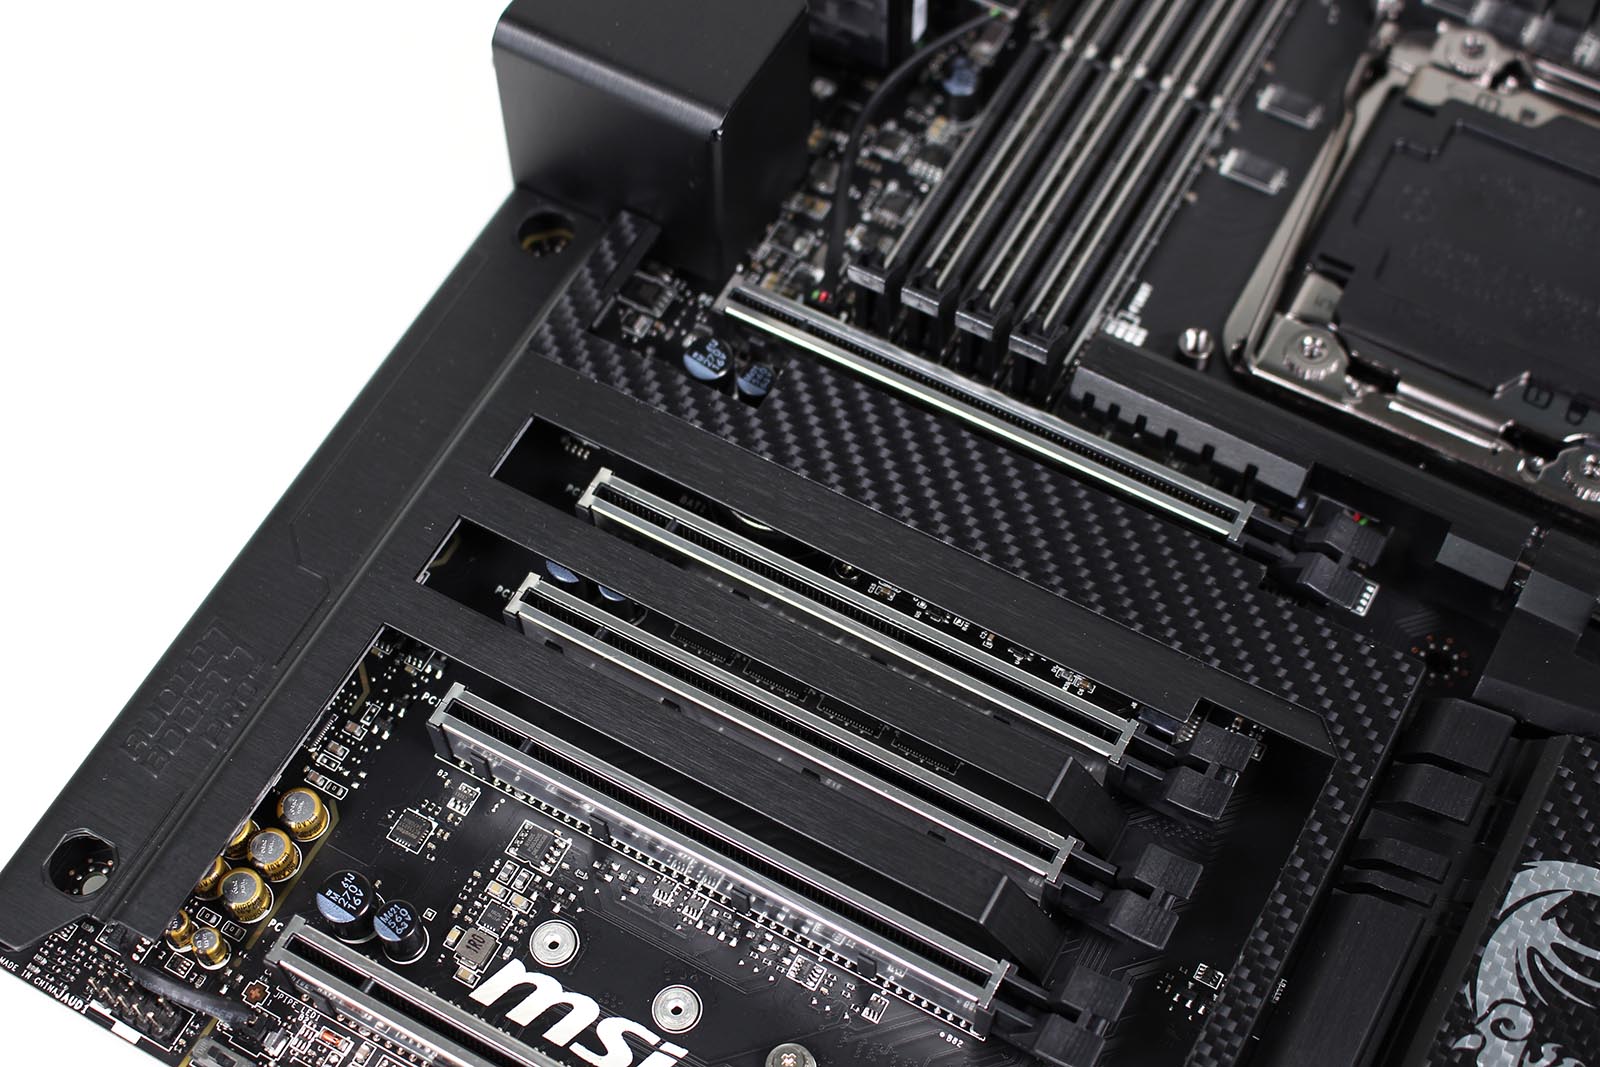 MSI X99A Godlike Gaming Carbon - PCIe Slots